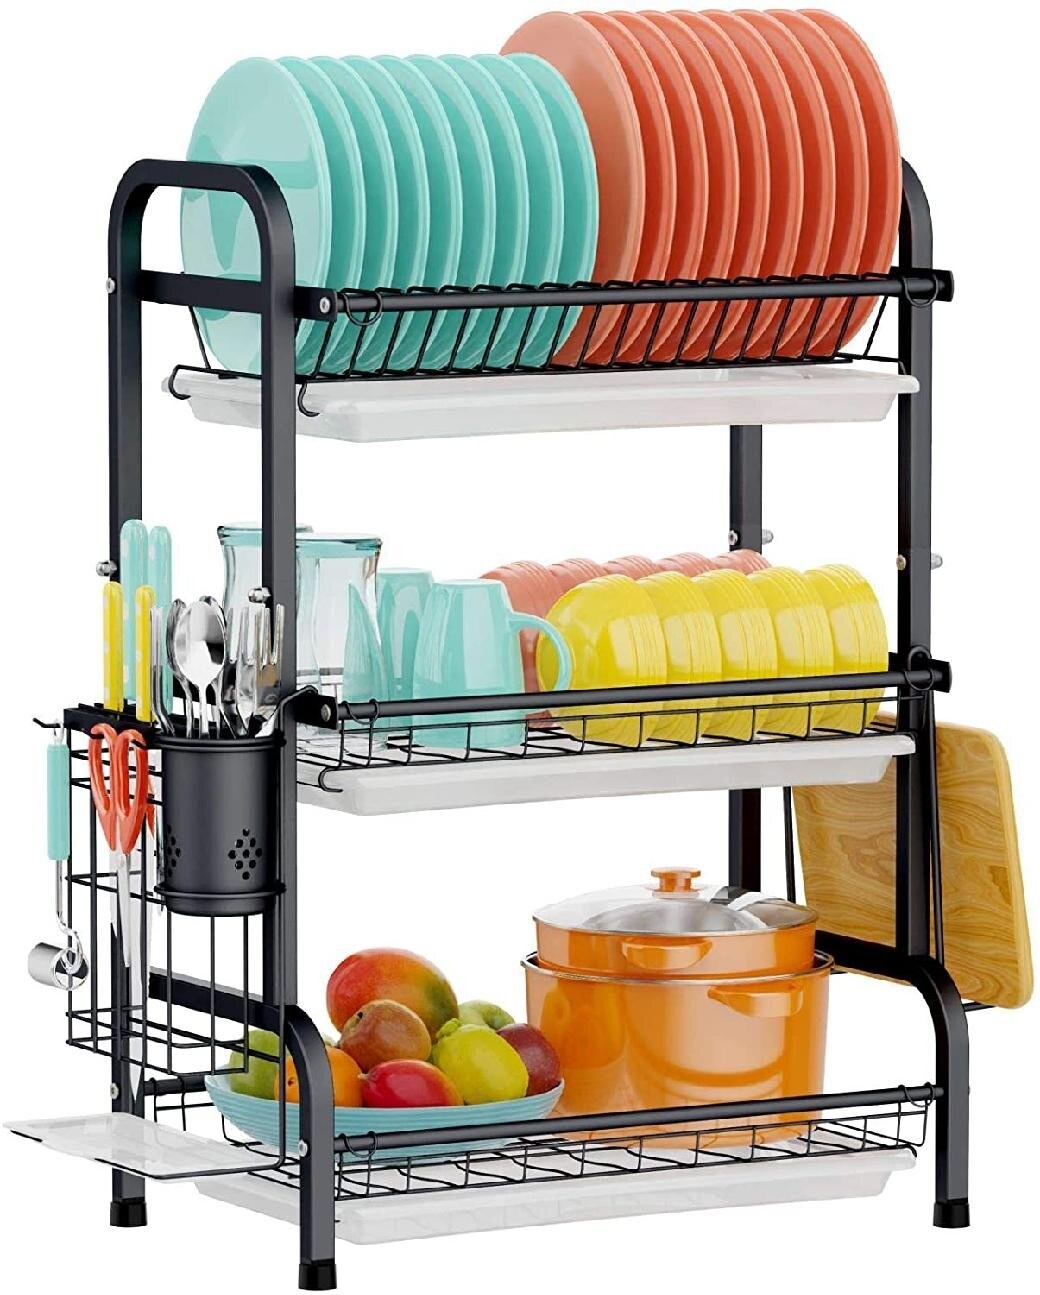 https://visualhunt.com/photos/23/large-capacity-stainless-steel-dish-rack.jpg